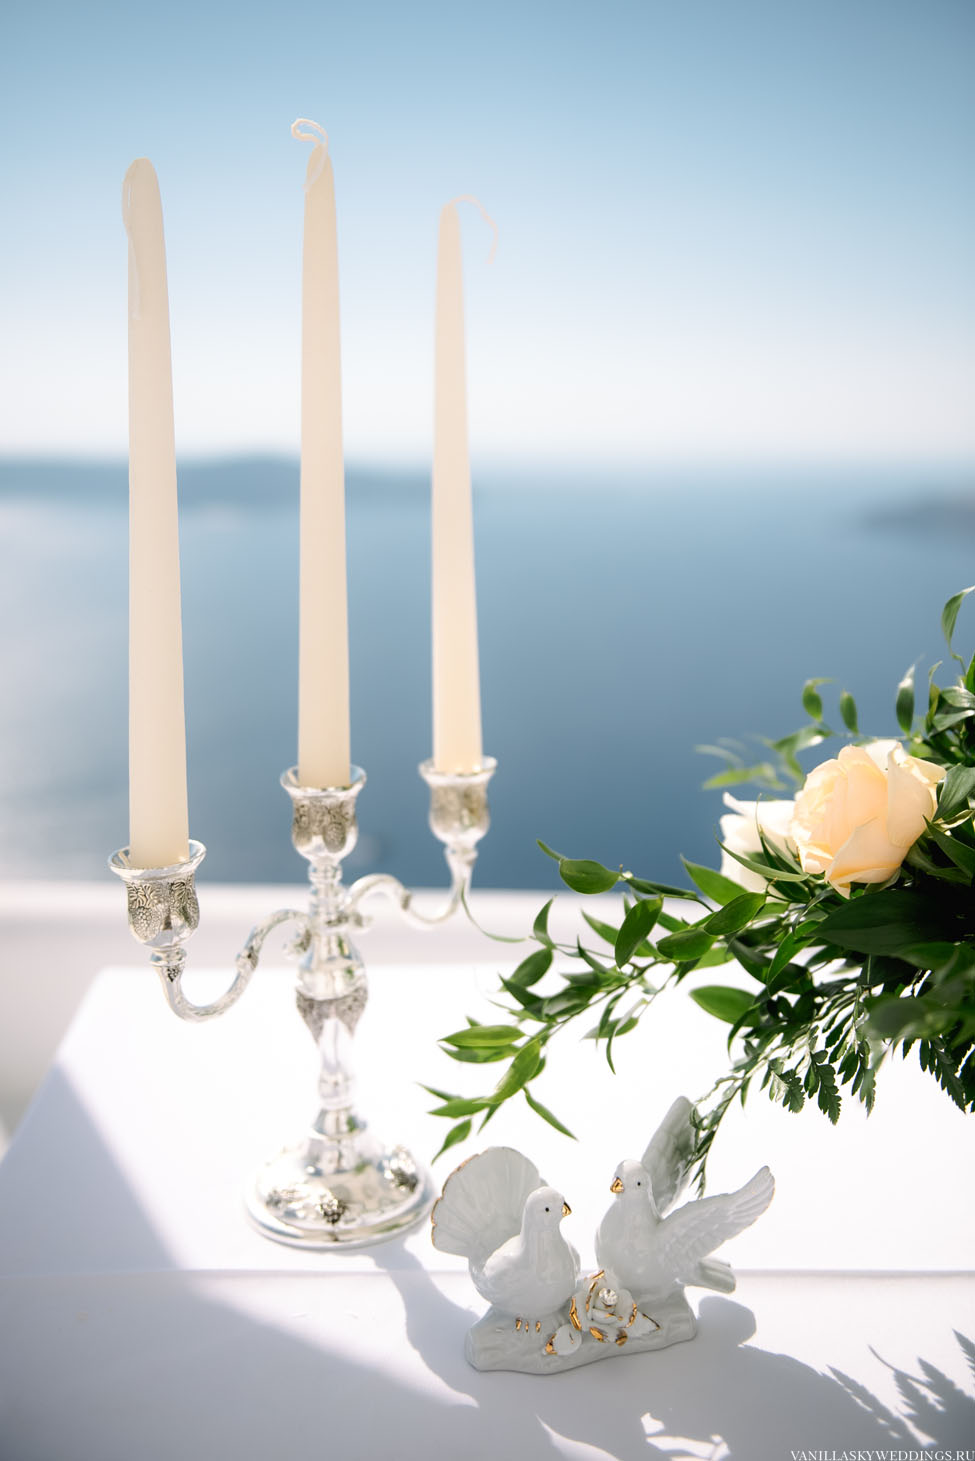 anna_sergey_santorini_greece_wedding_andromeda_villas